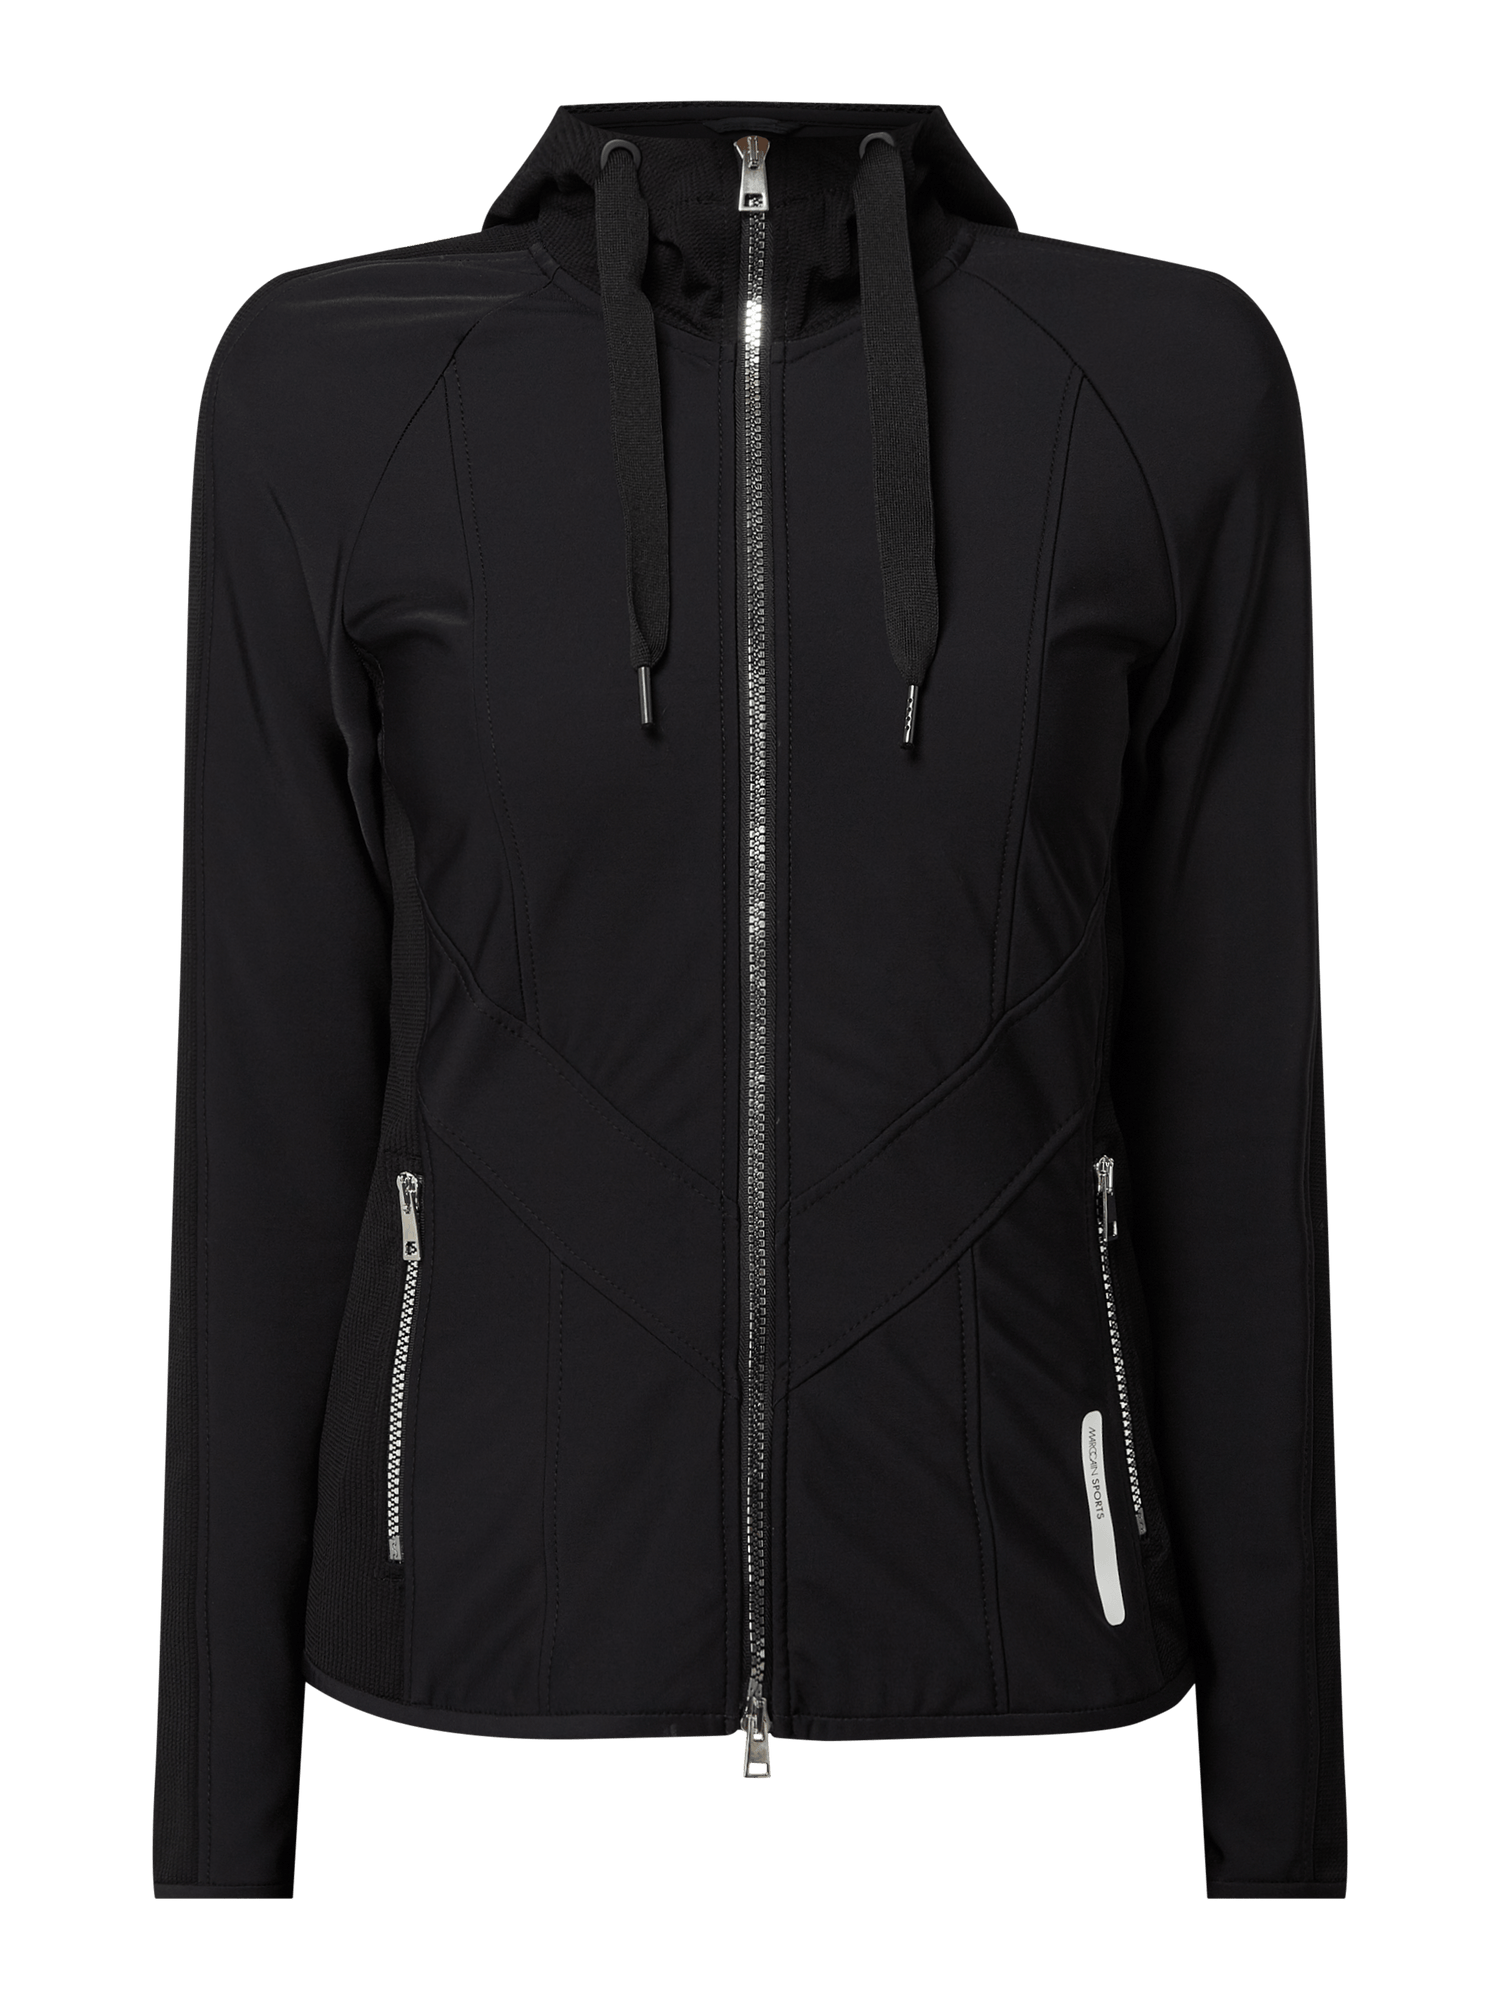 Marc Cain Sports Knitwear Marc Cain Sports Jacket  MS 31.40 J59 Black izzi-of-baslow